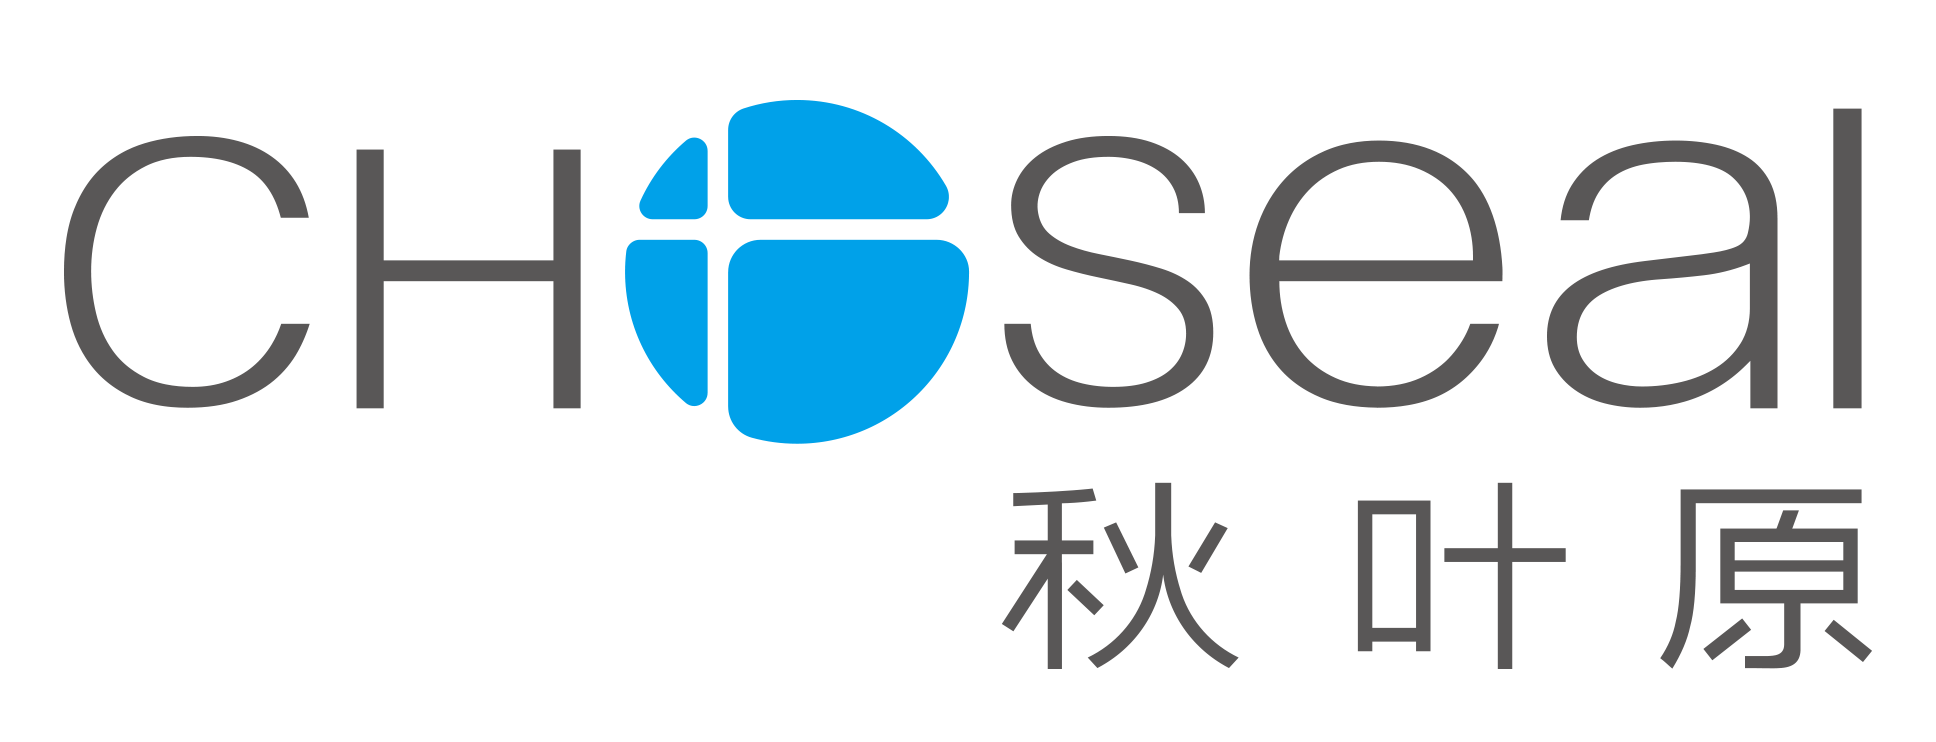 秋叶原logo